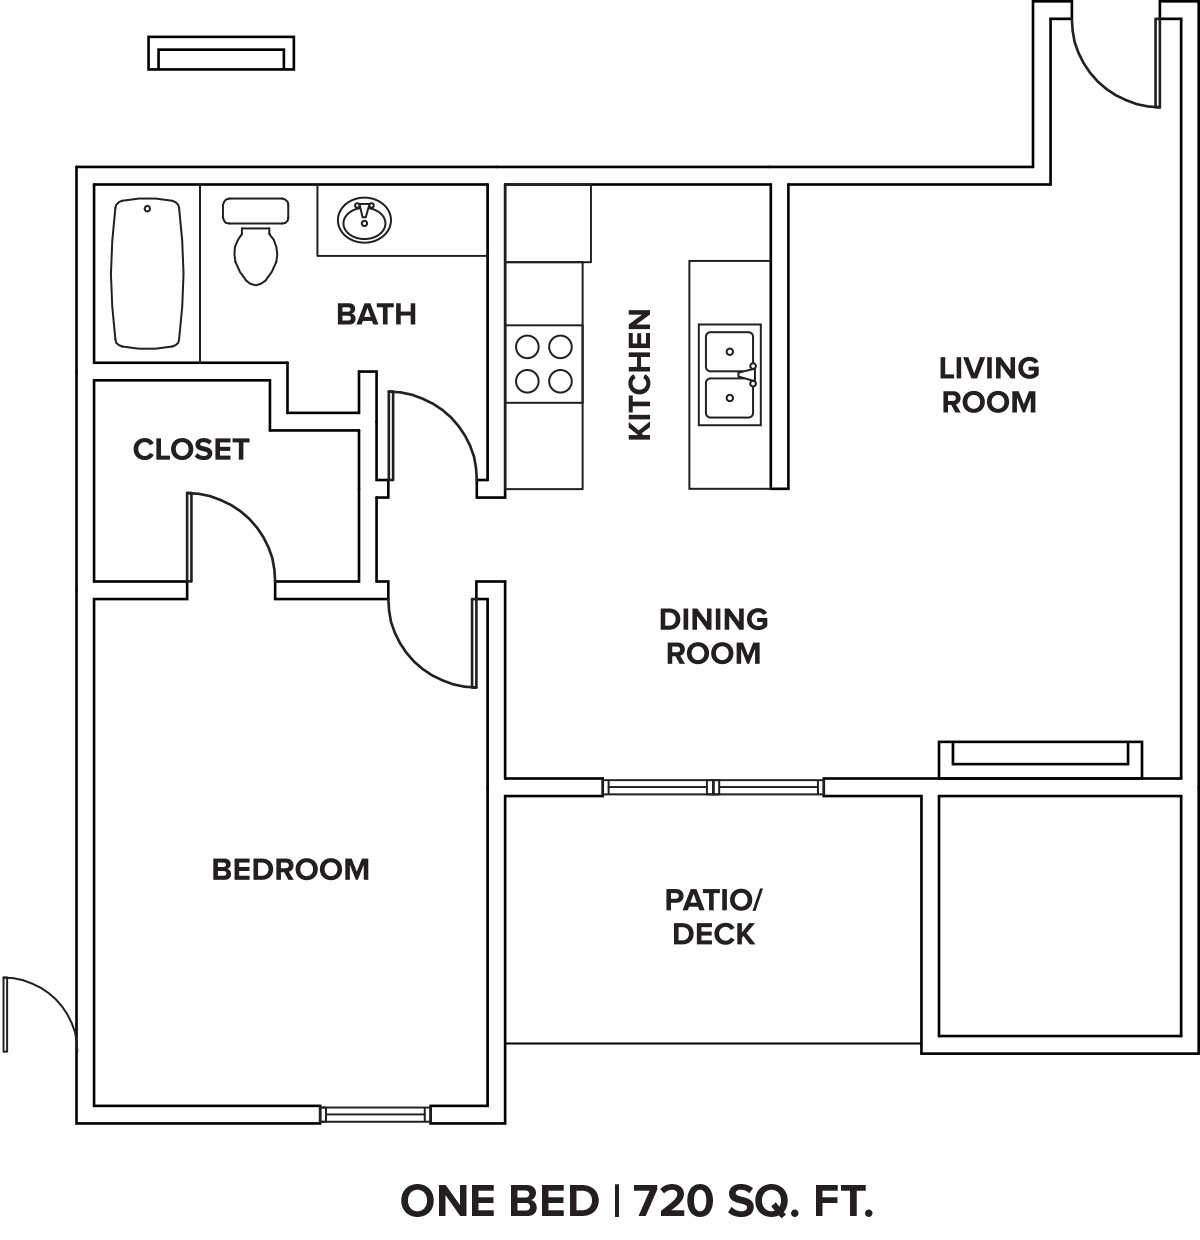 Villas-of-Oak-Creste_Floor-Plans_V2_One-Bed-720-sq-ft.jpg